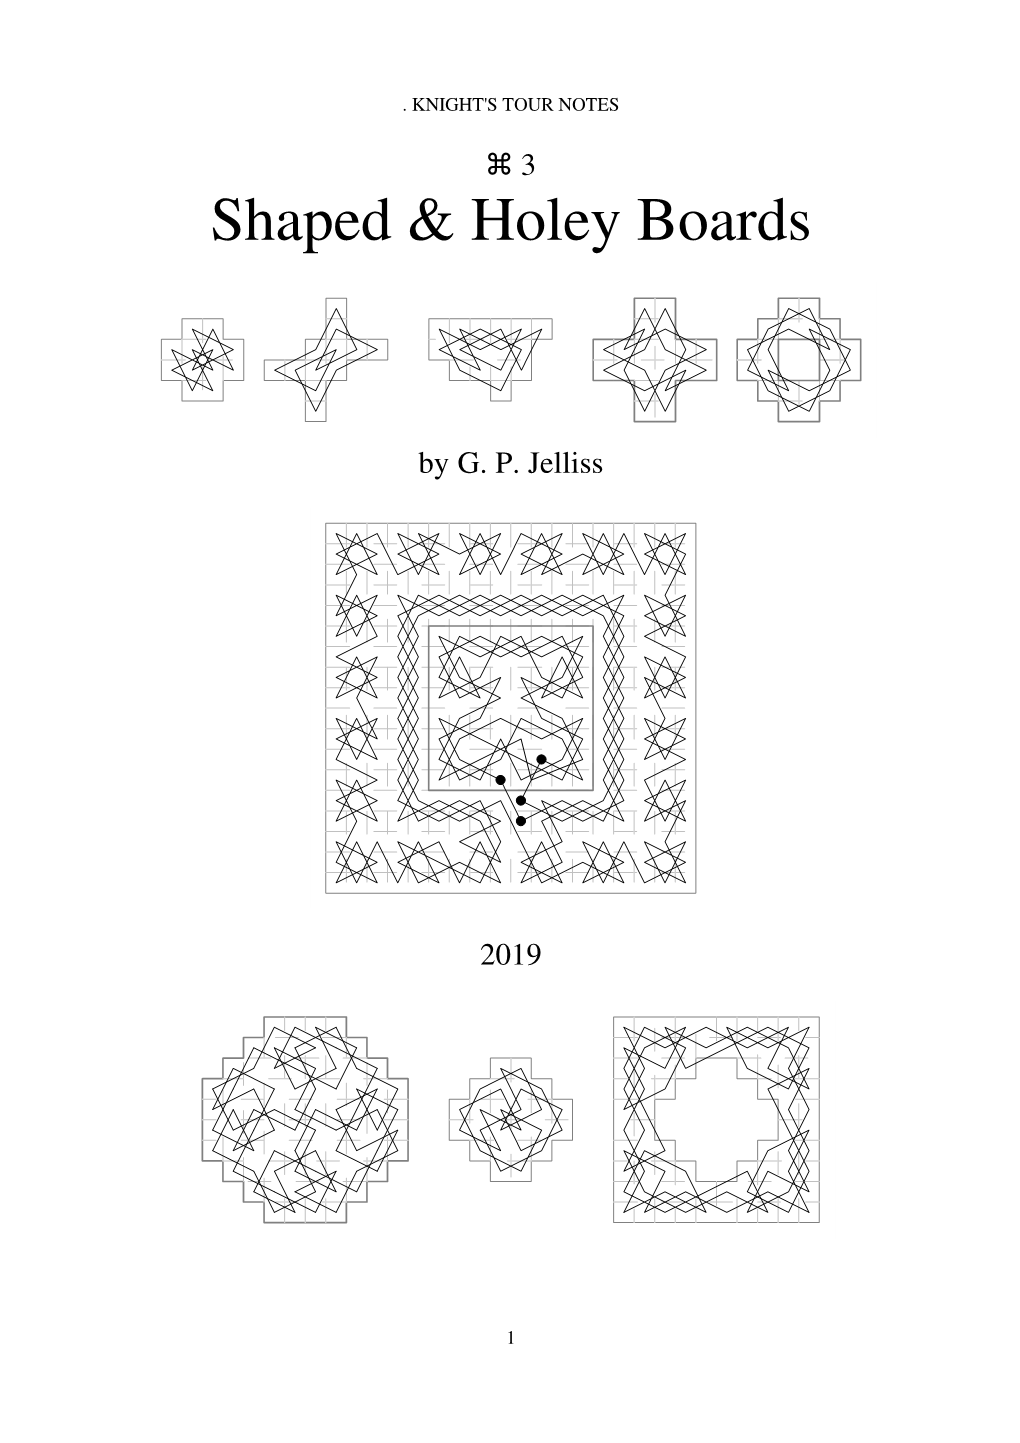 Shaped & Holey Boards